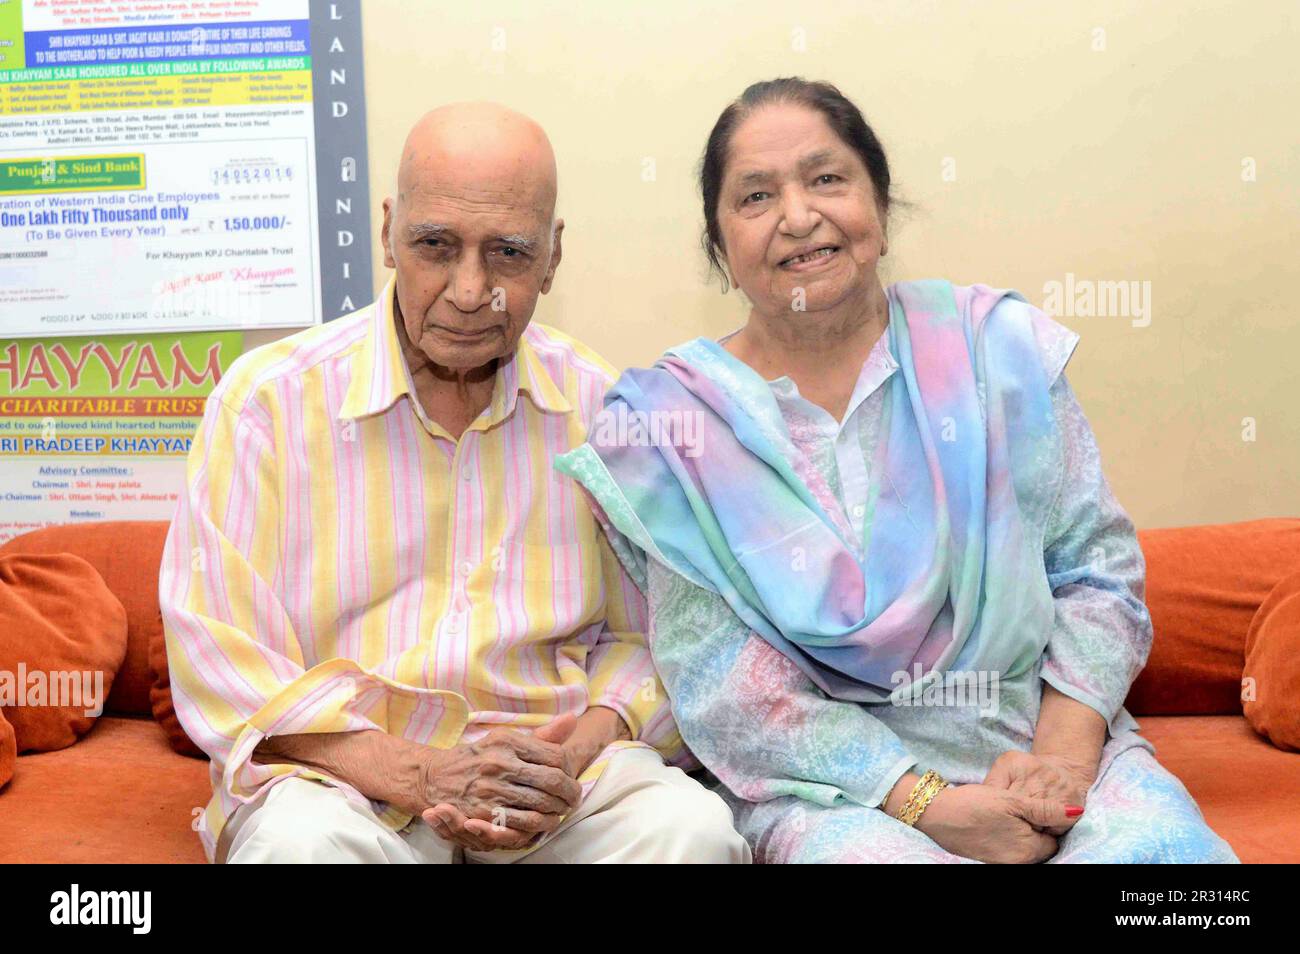 Khayyam, Mohammed Zahur Khayyam Hashmi, direttore di musica indiana, Jagjit Kaur, moglie, Mumbai, India, 27 maggio 2017 Foto Stock